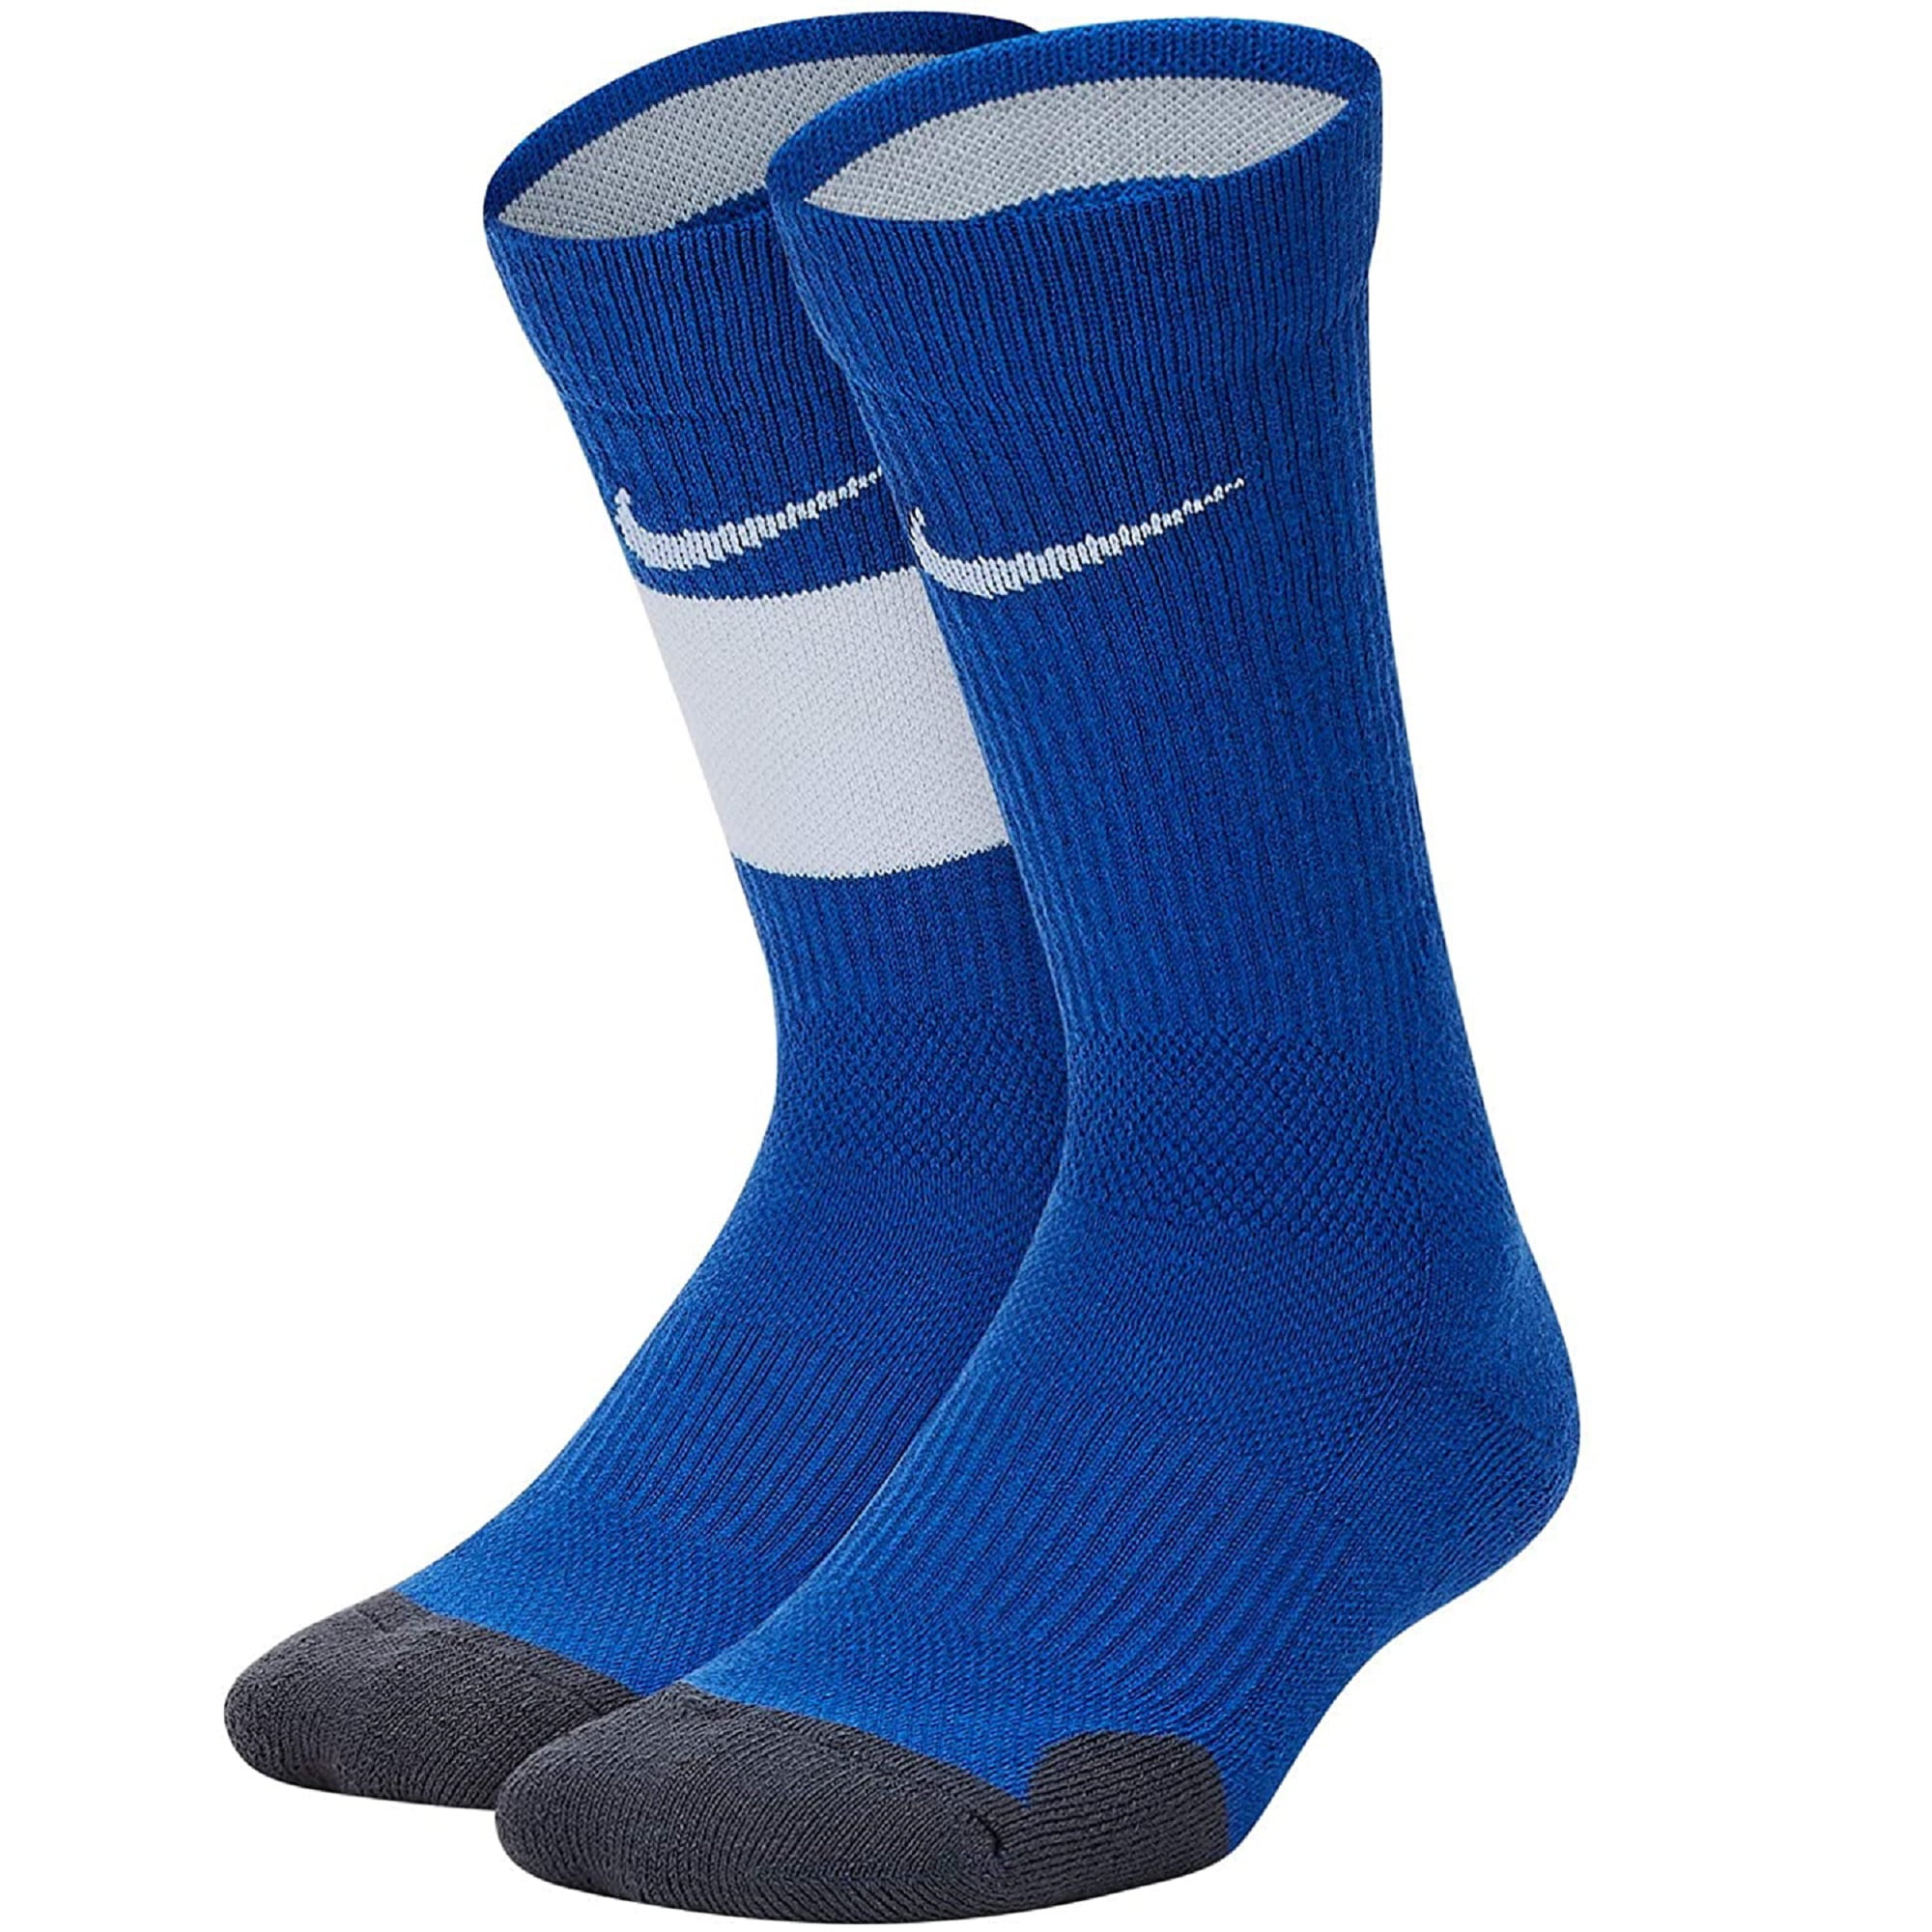 Boys basketball socks